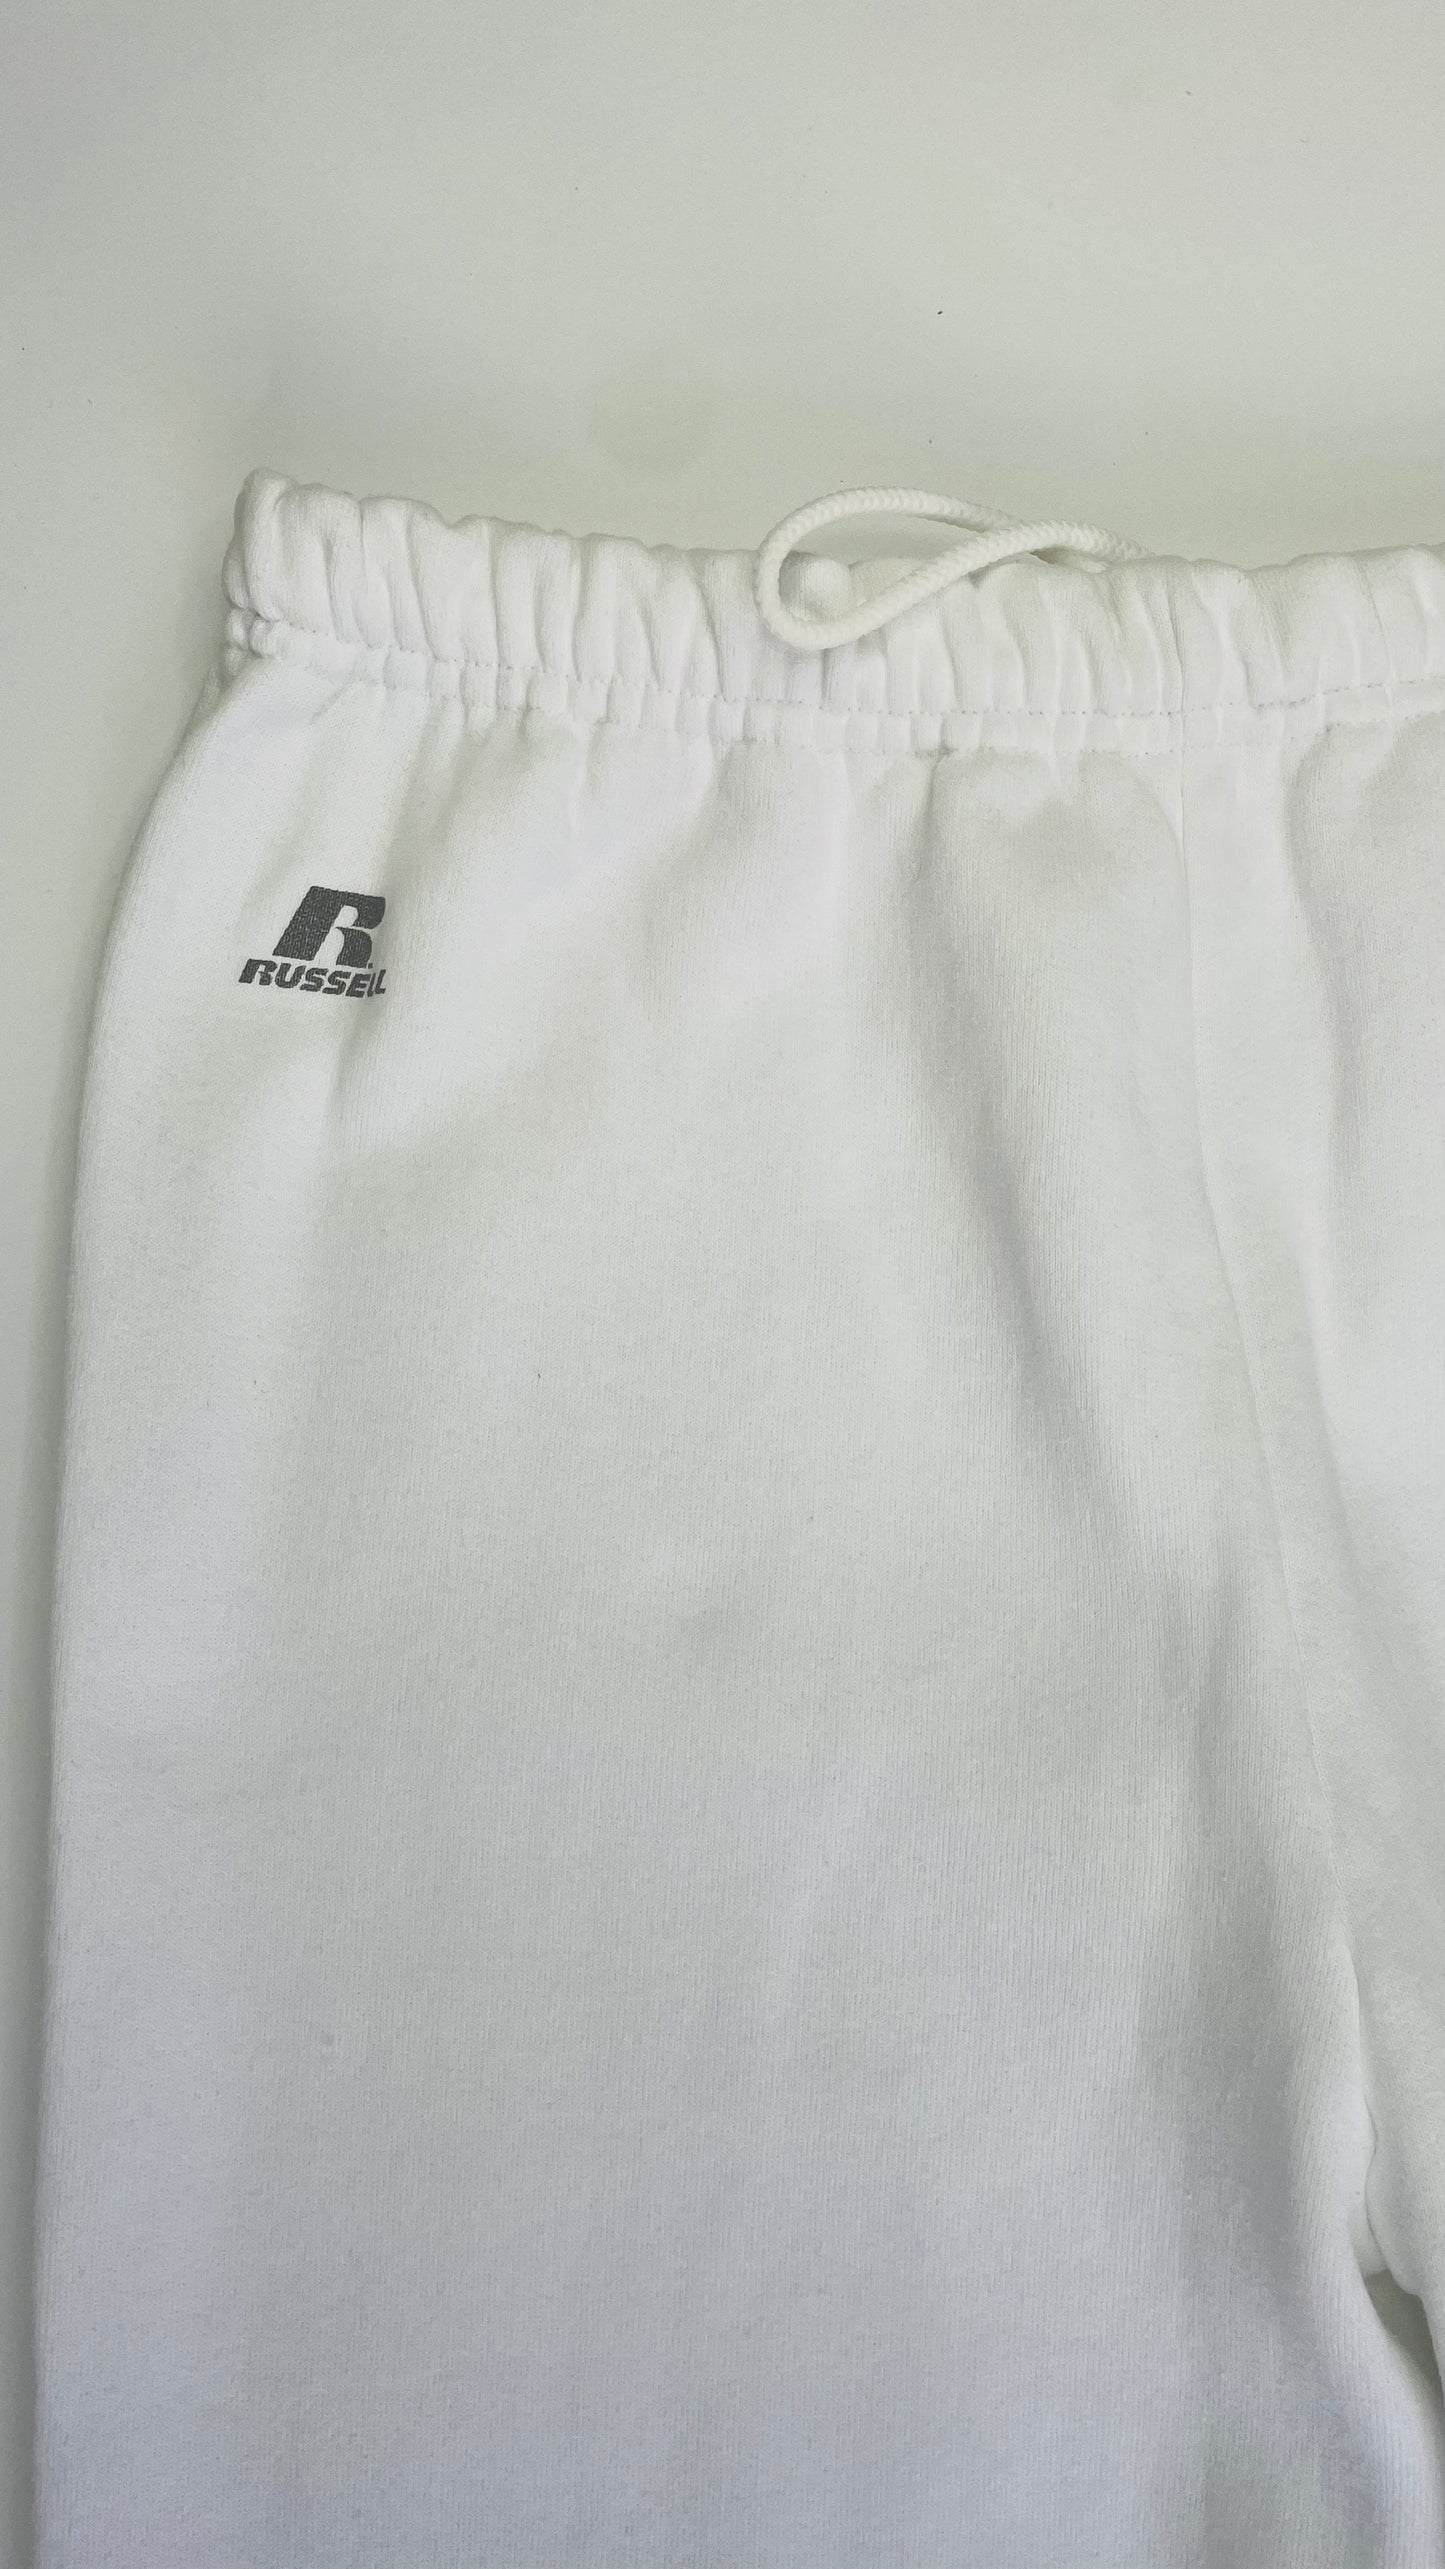 Vintage 80s Russell Athletics white sweatpants - Size L